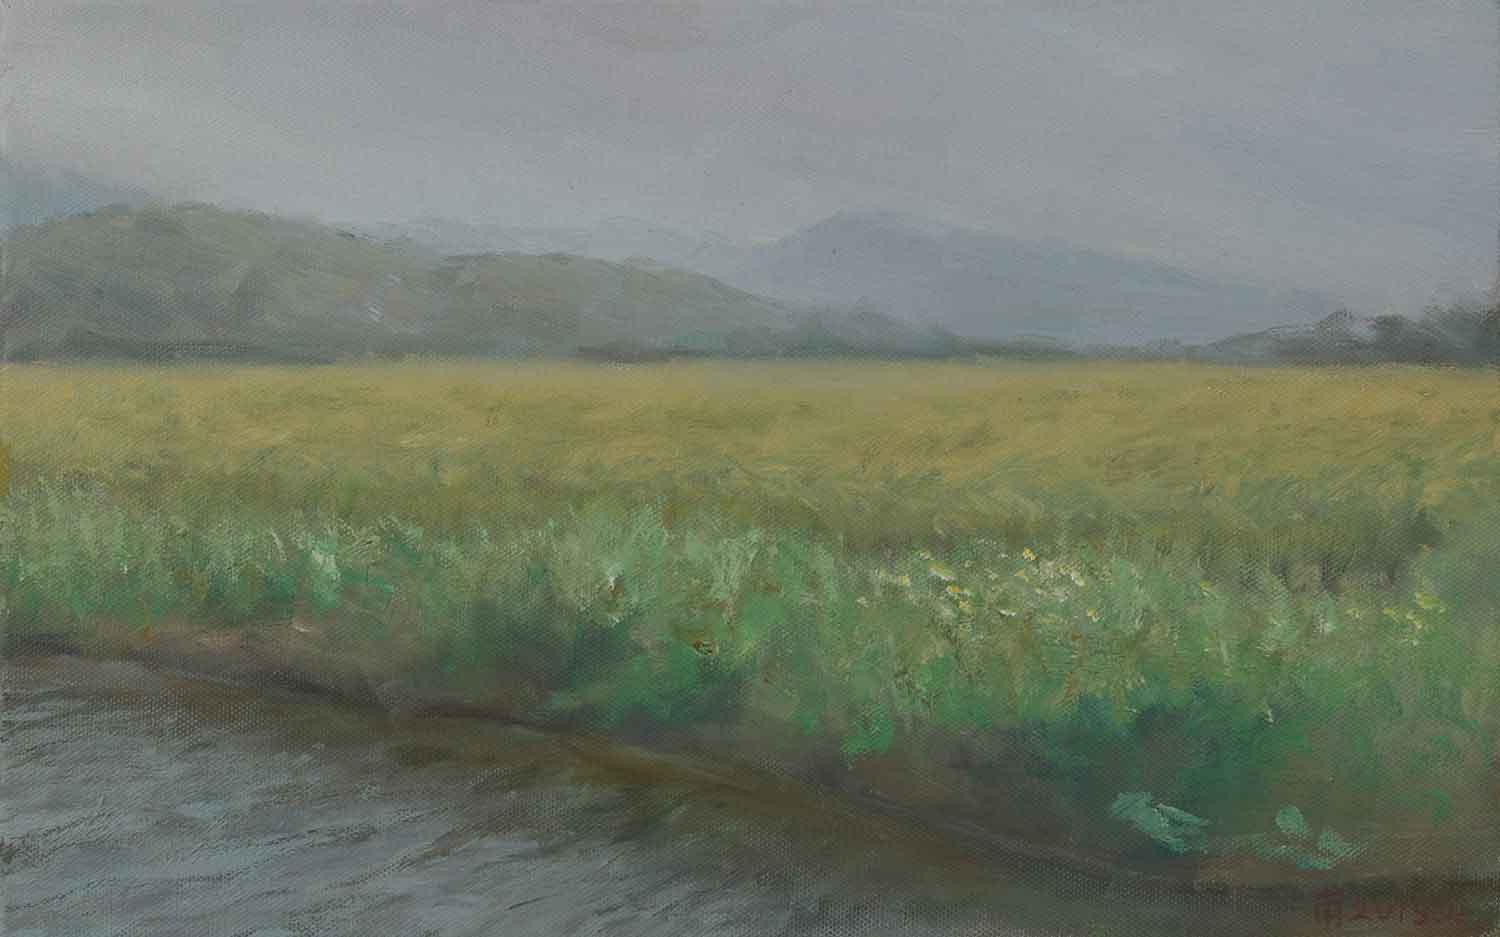  Oil on canvas. 4P (33.0×21.0 cm) 2015 